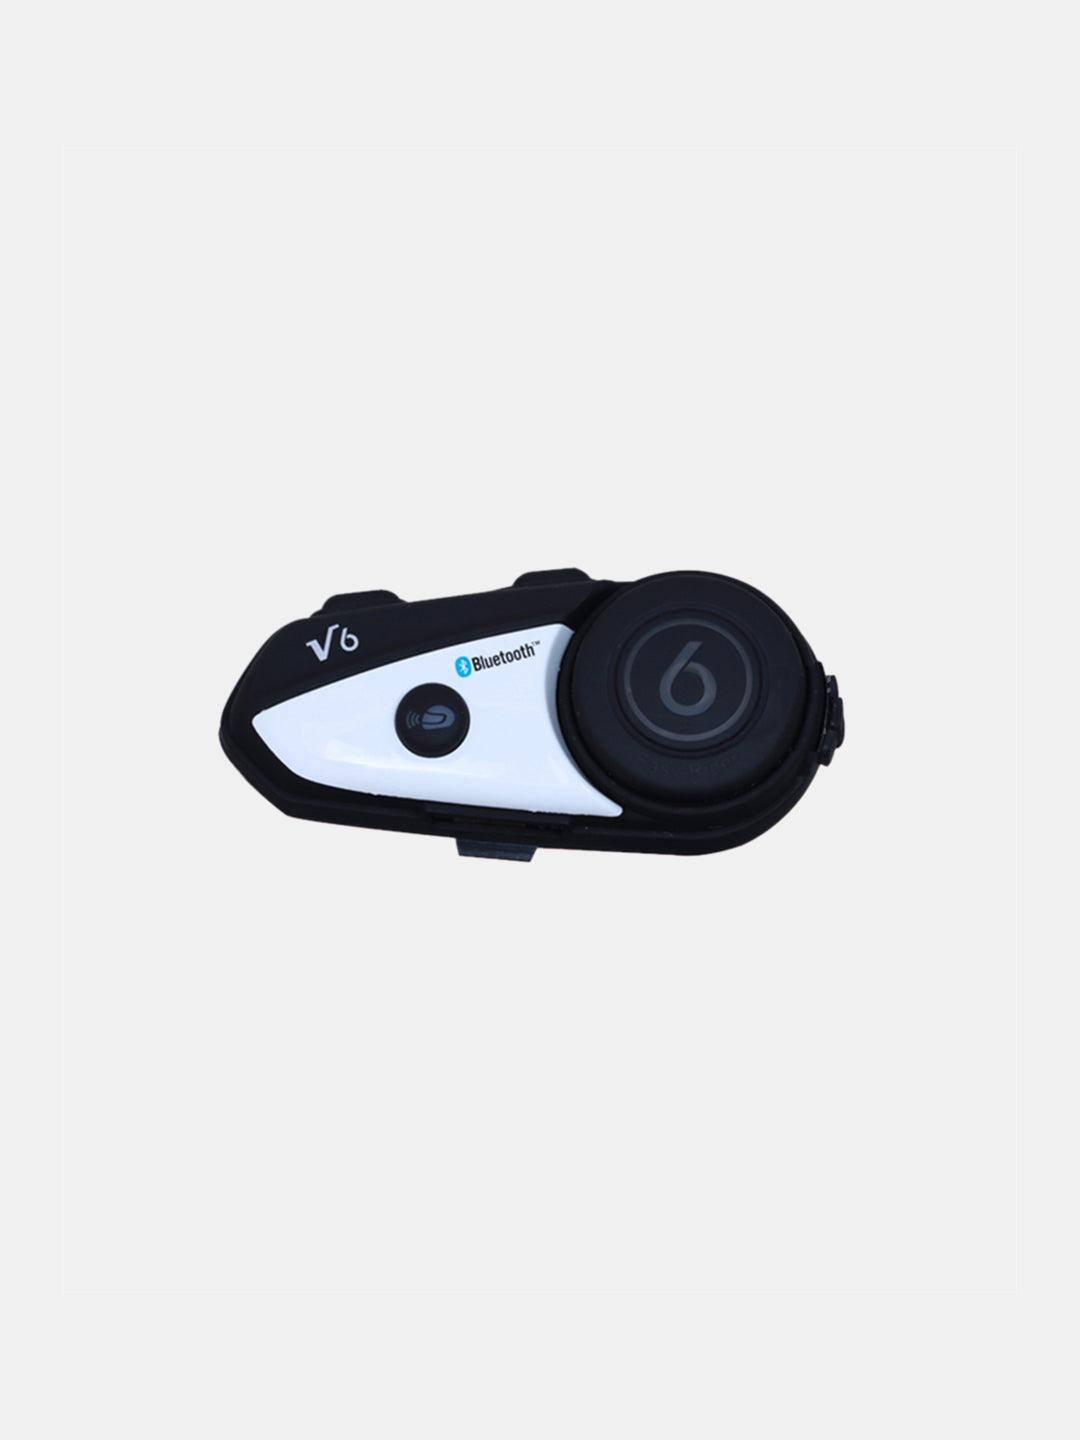 Vimoto Bluetooth Headset V6 - Moto Modz